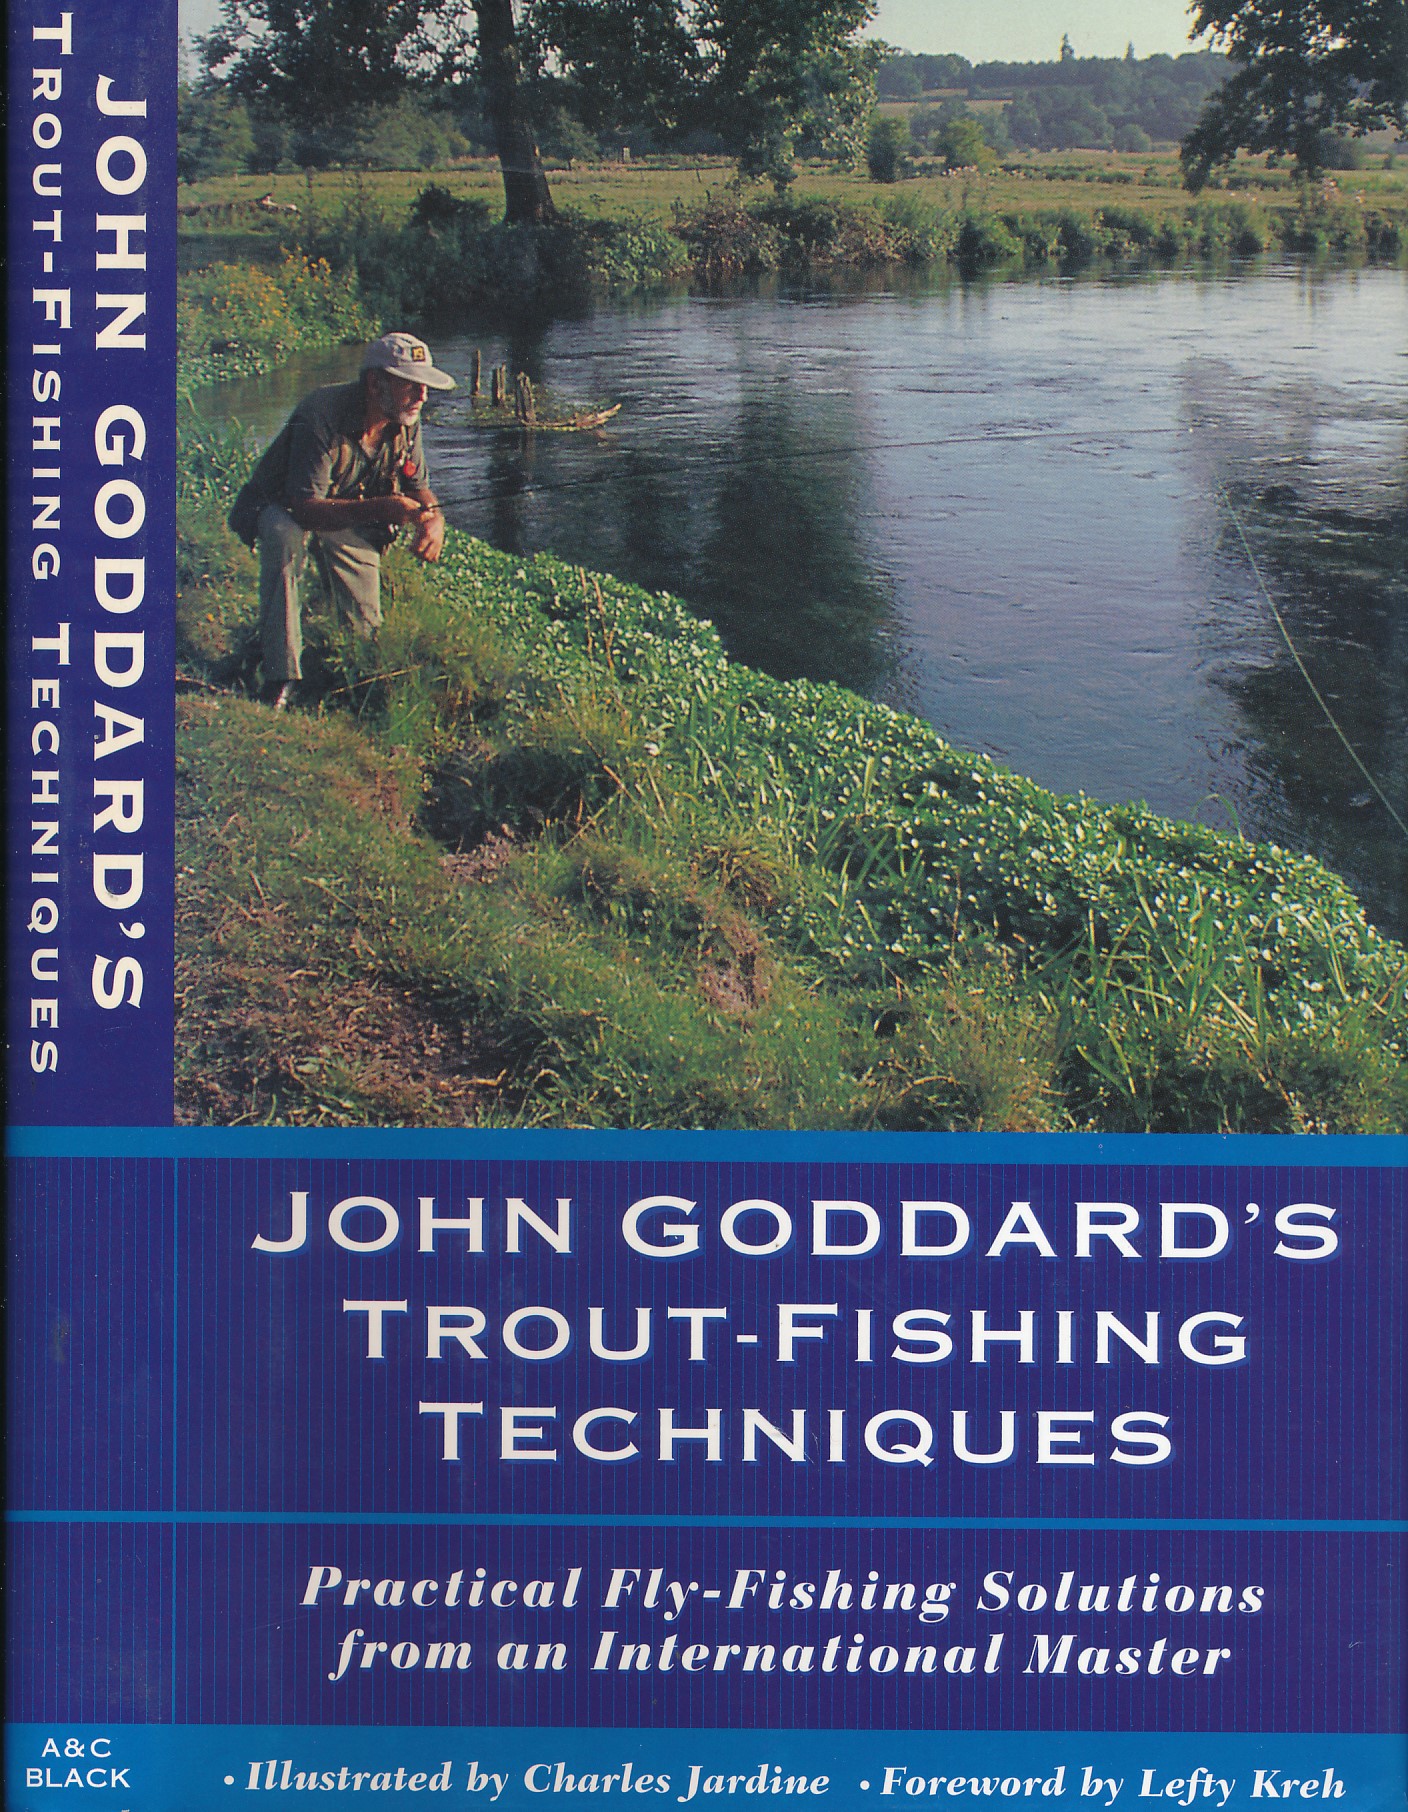 John Goddard's Trout-Fishing Techniques